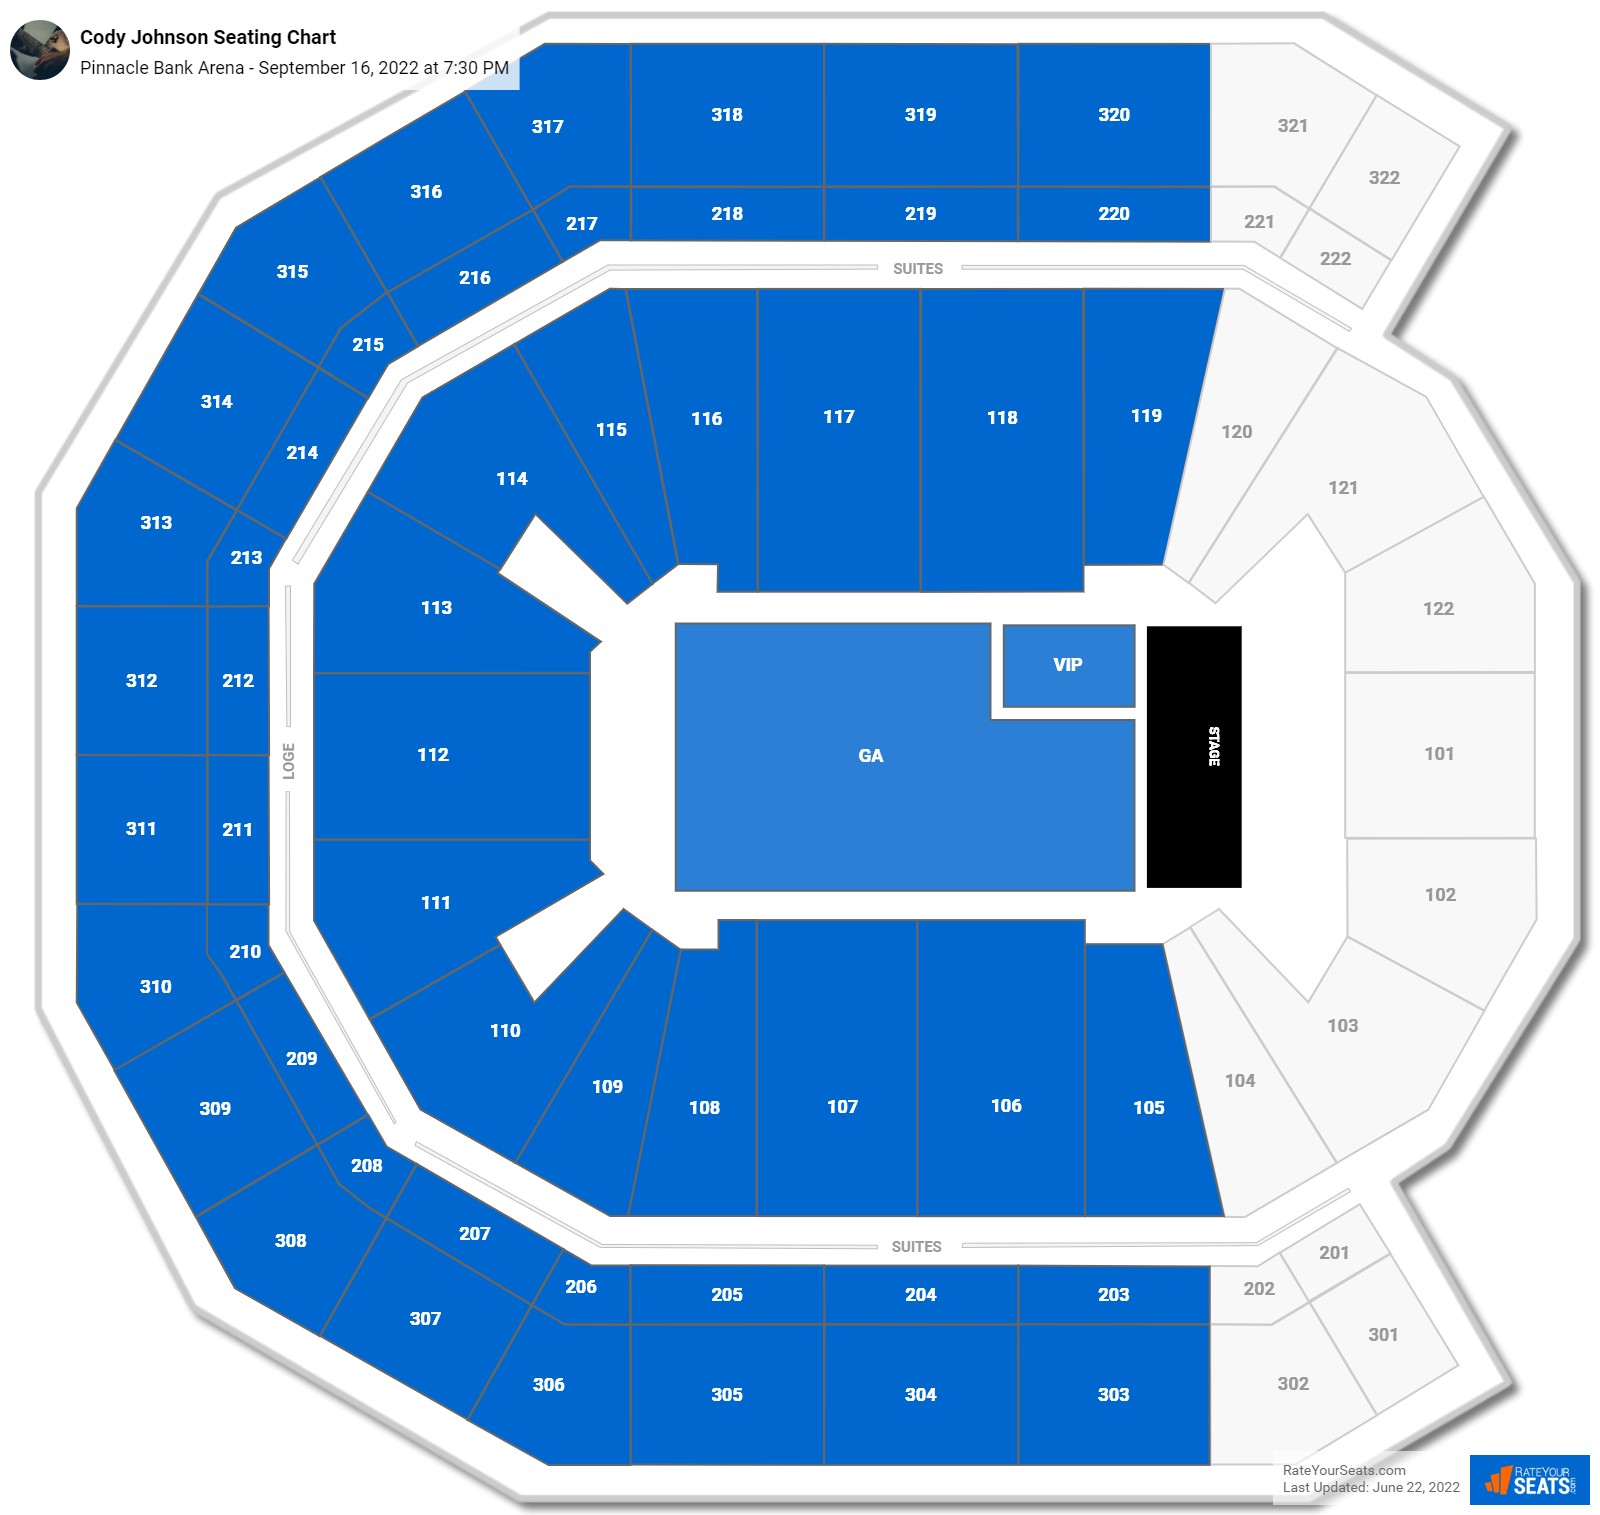 pinnacle-bank-arena-concert-seating-chart-rateyourseats